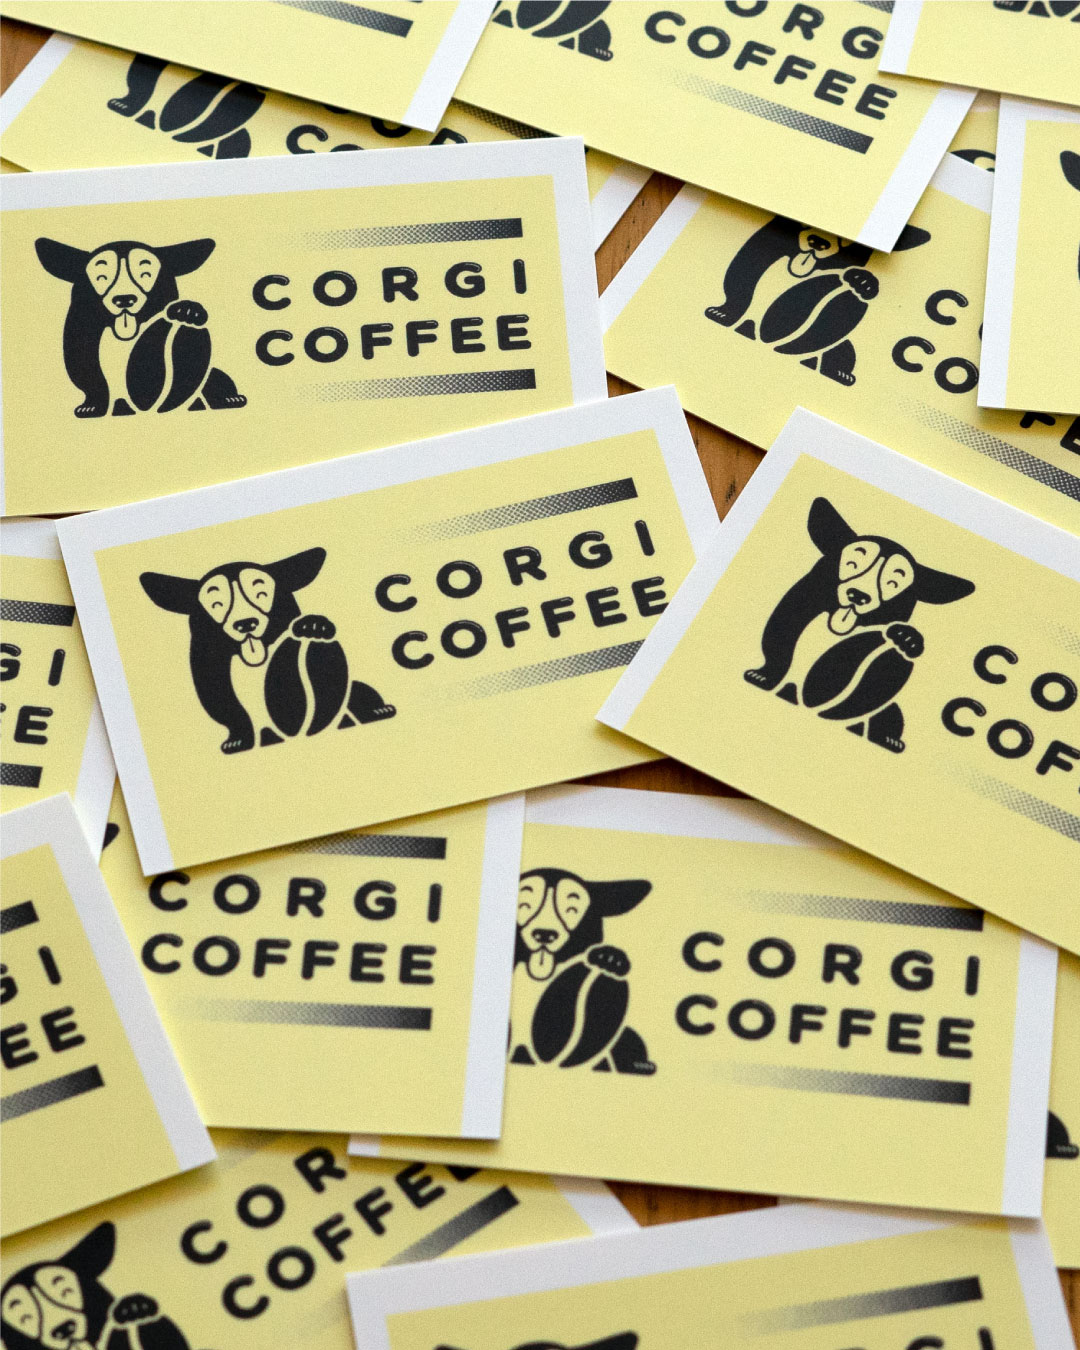 Corgi Coffee